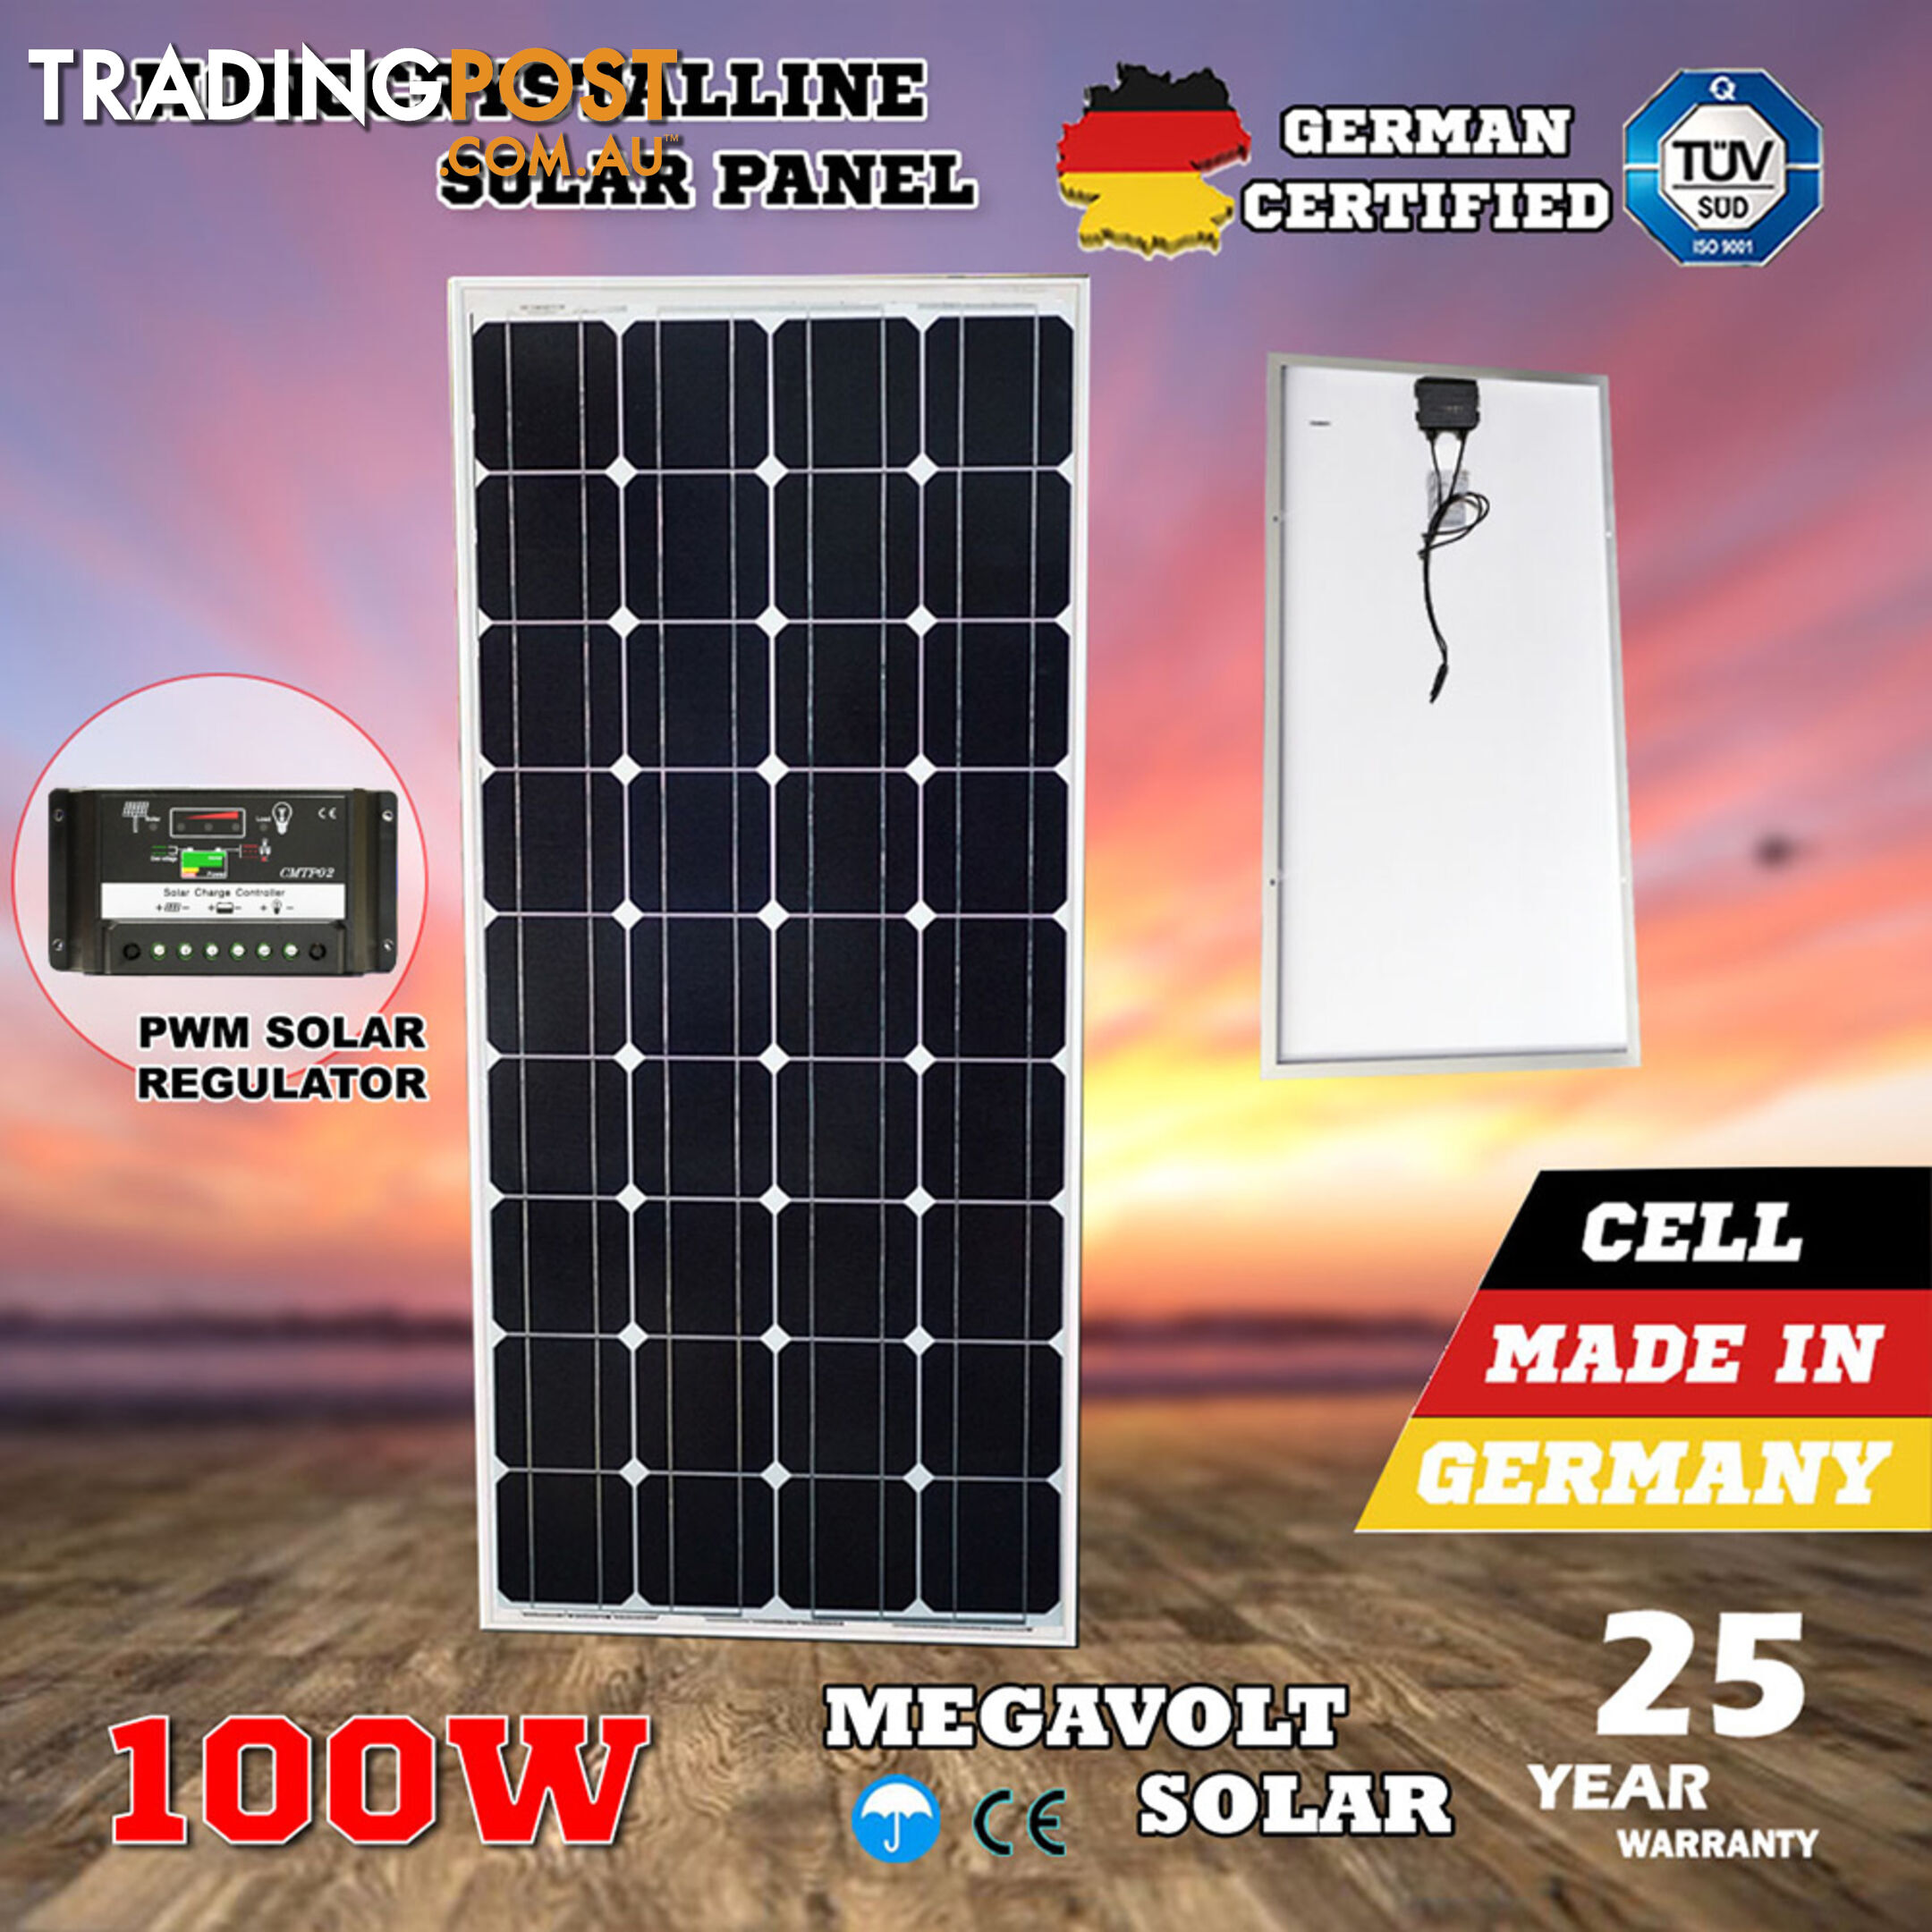 100W 12V SOLAR PANEL KIT HOME GENERATOR CARAVAN CAMPING POWER MONO CHARGING PWM